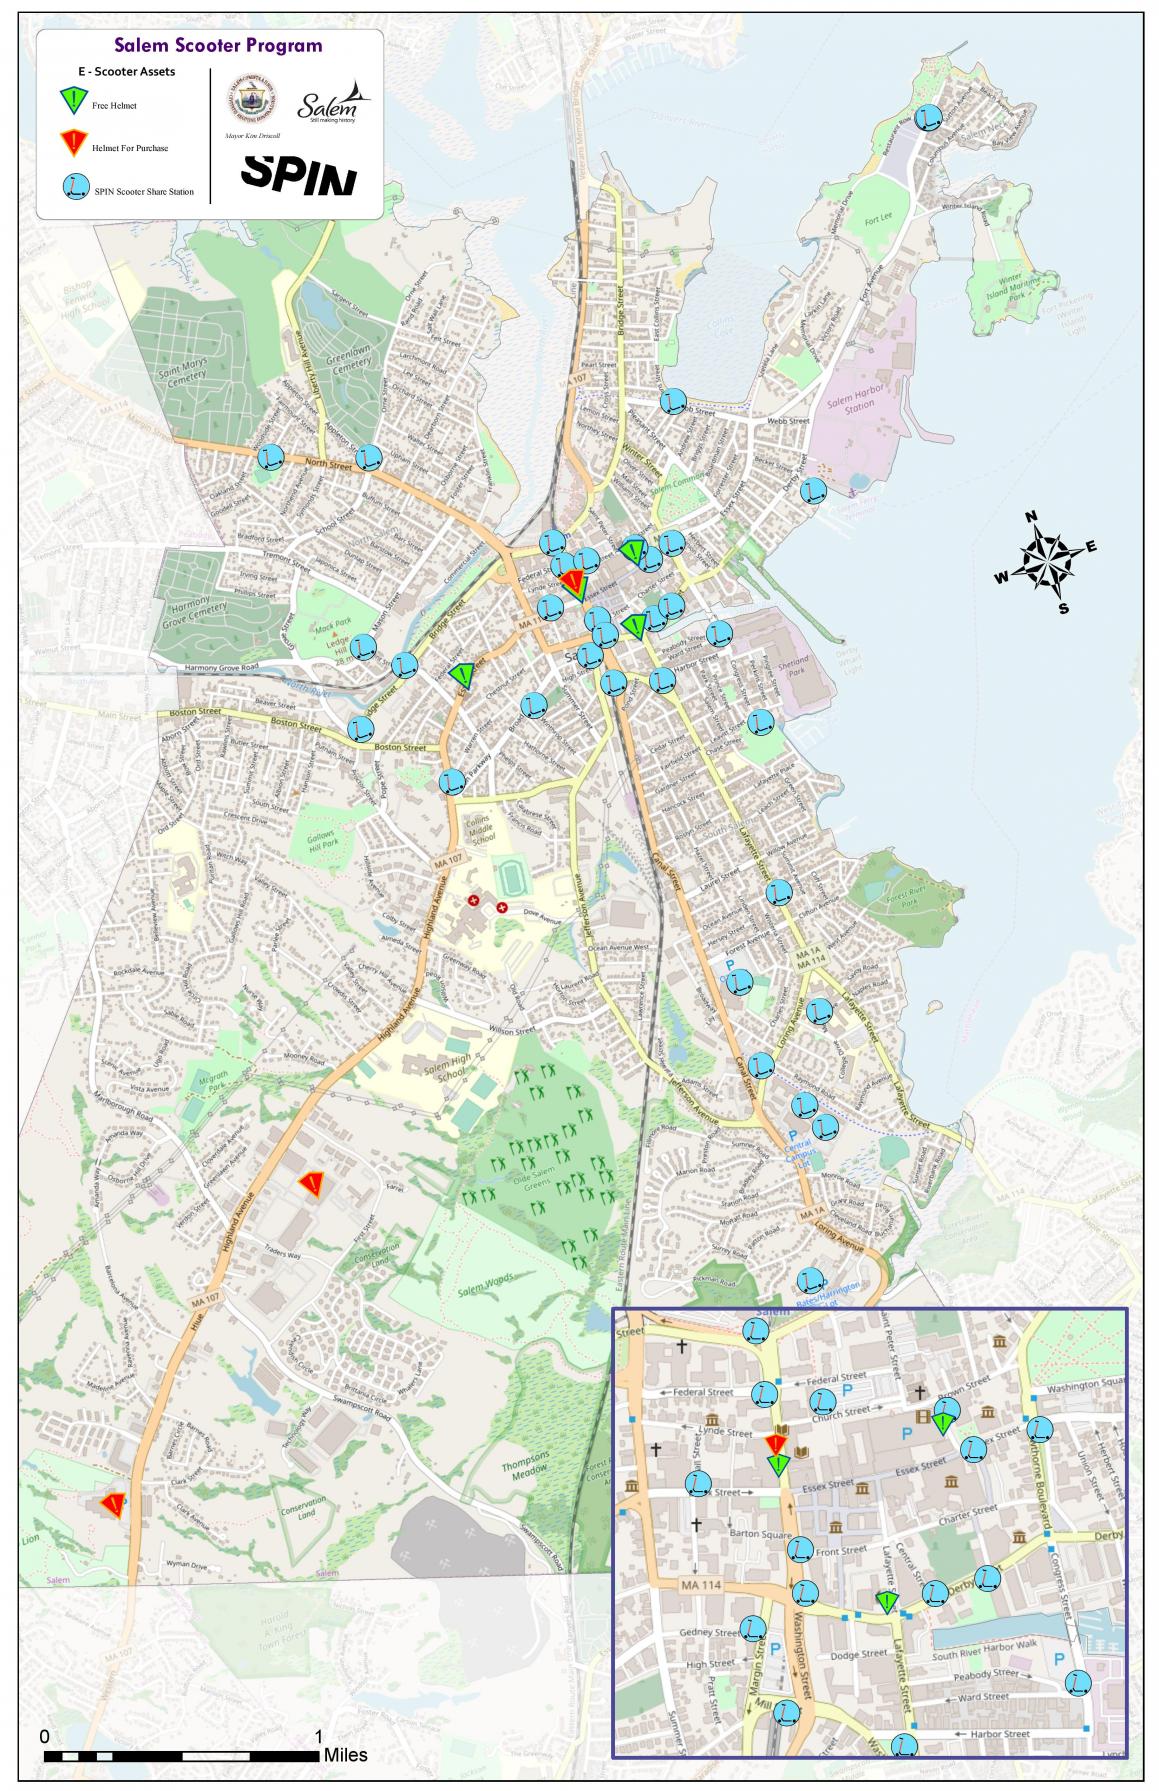 Salem Scooter Parking and Helmet Locations